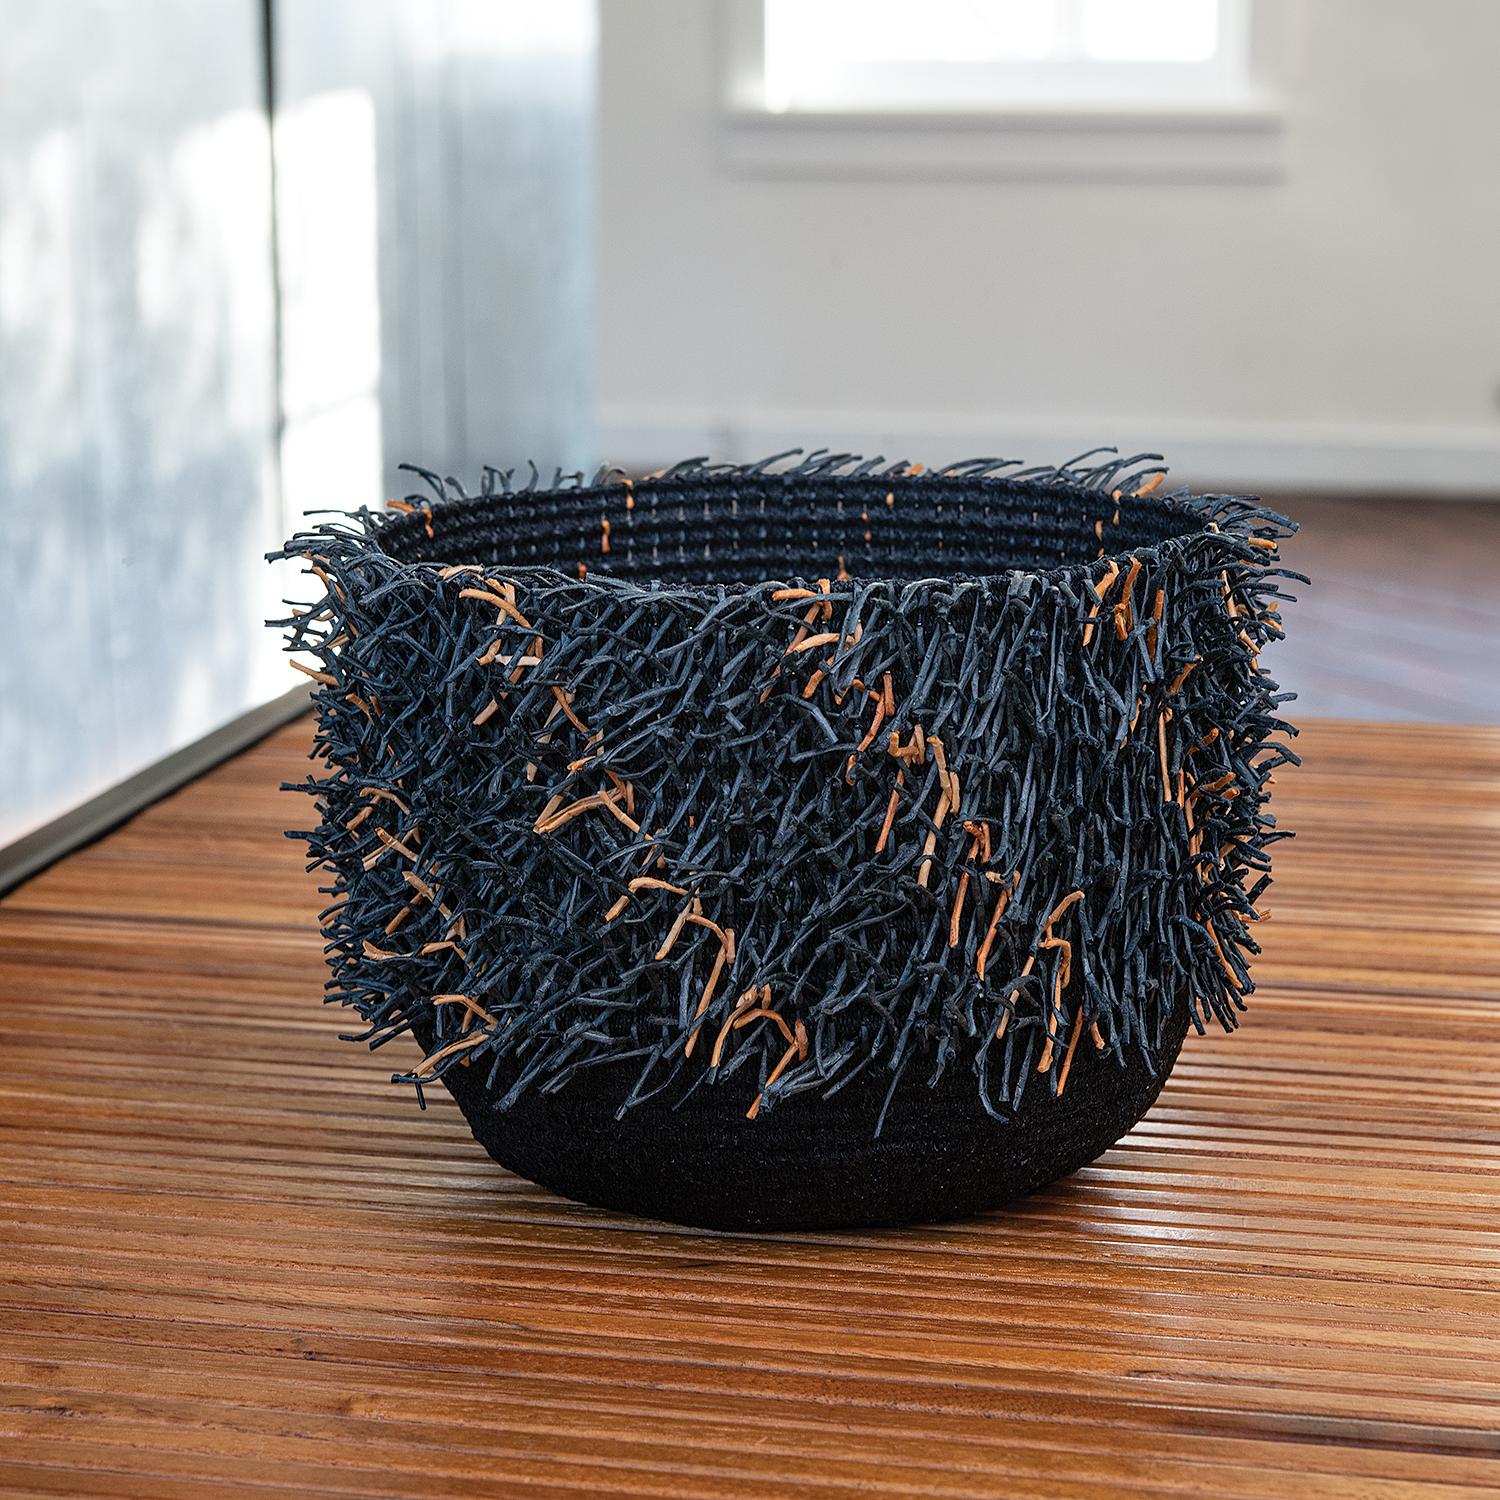 Woven Rya Basket #10-18, woven basket sculpture by Danish artist Birgit Birkkjær For Sale 3